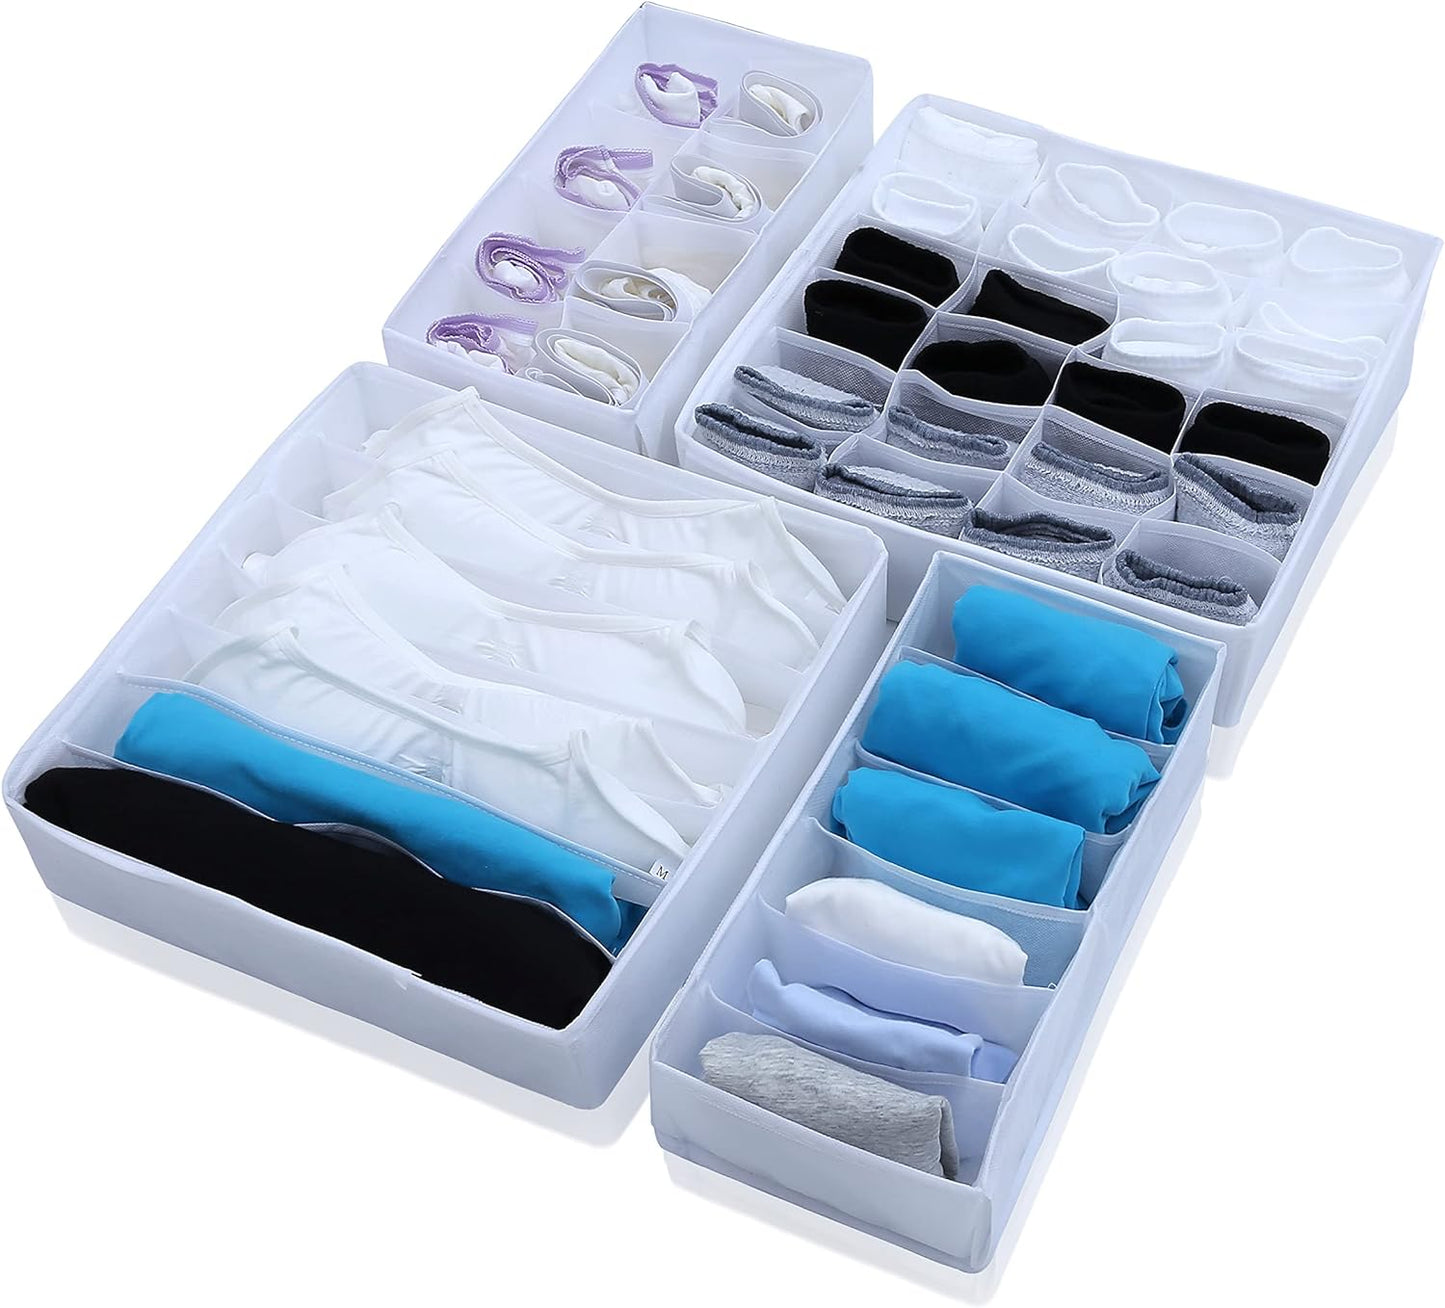 Closet Drawers Organizer Storage for Underwear, Bra, Socks and Clothes